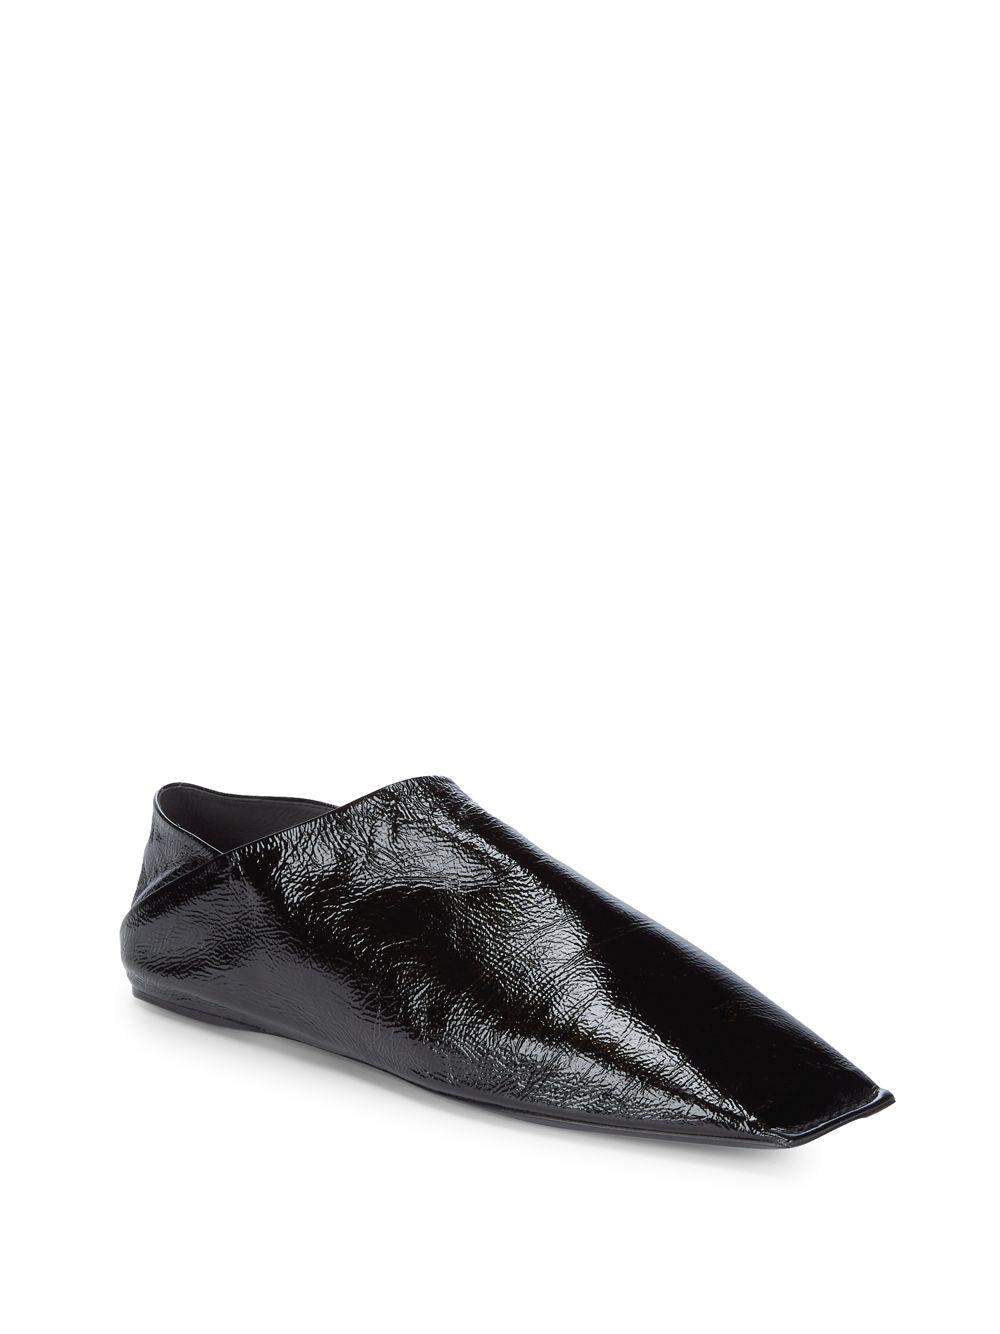 Balenciaga Square Toe Leather Flats in Black | Lyst